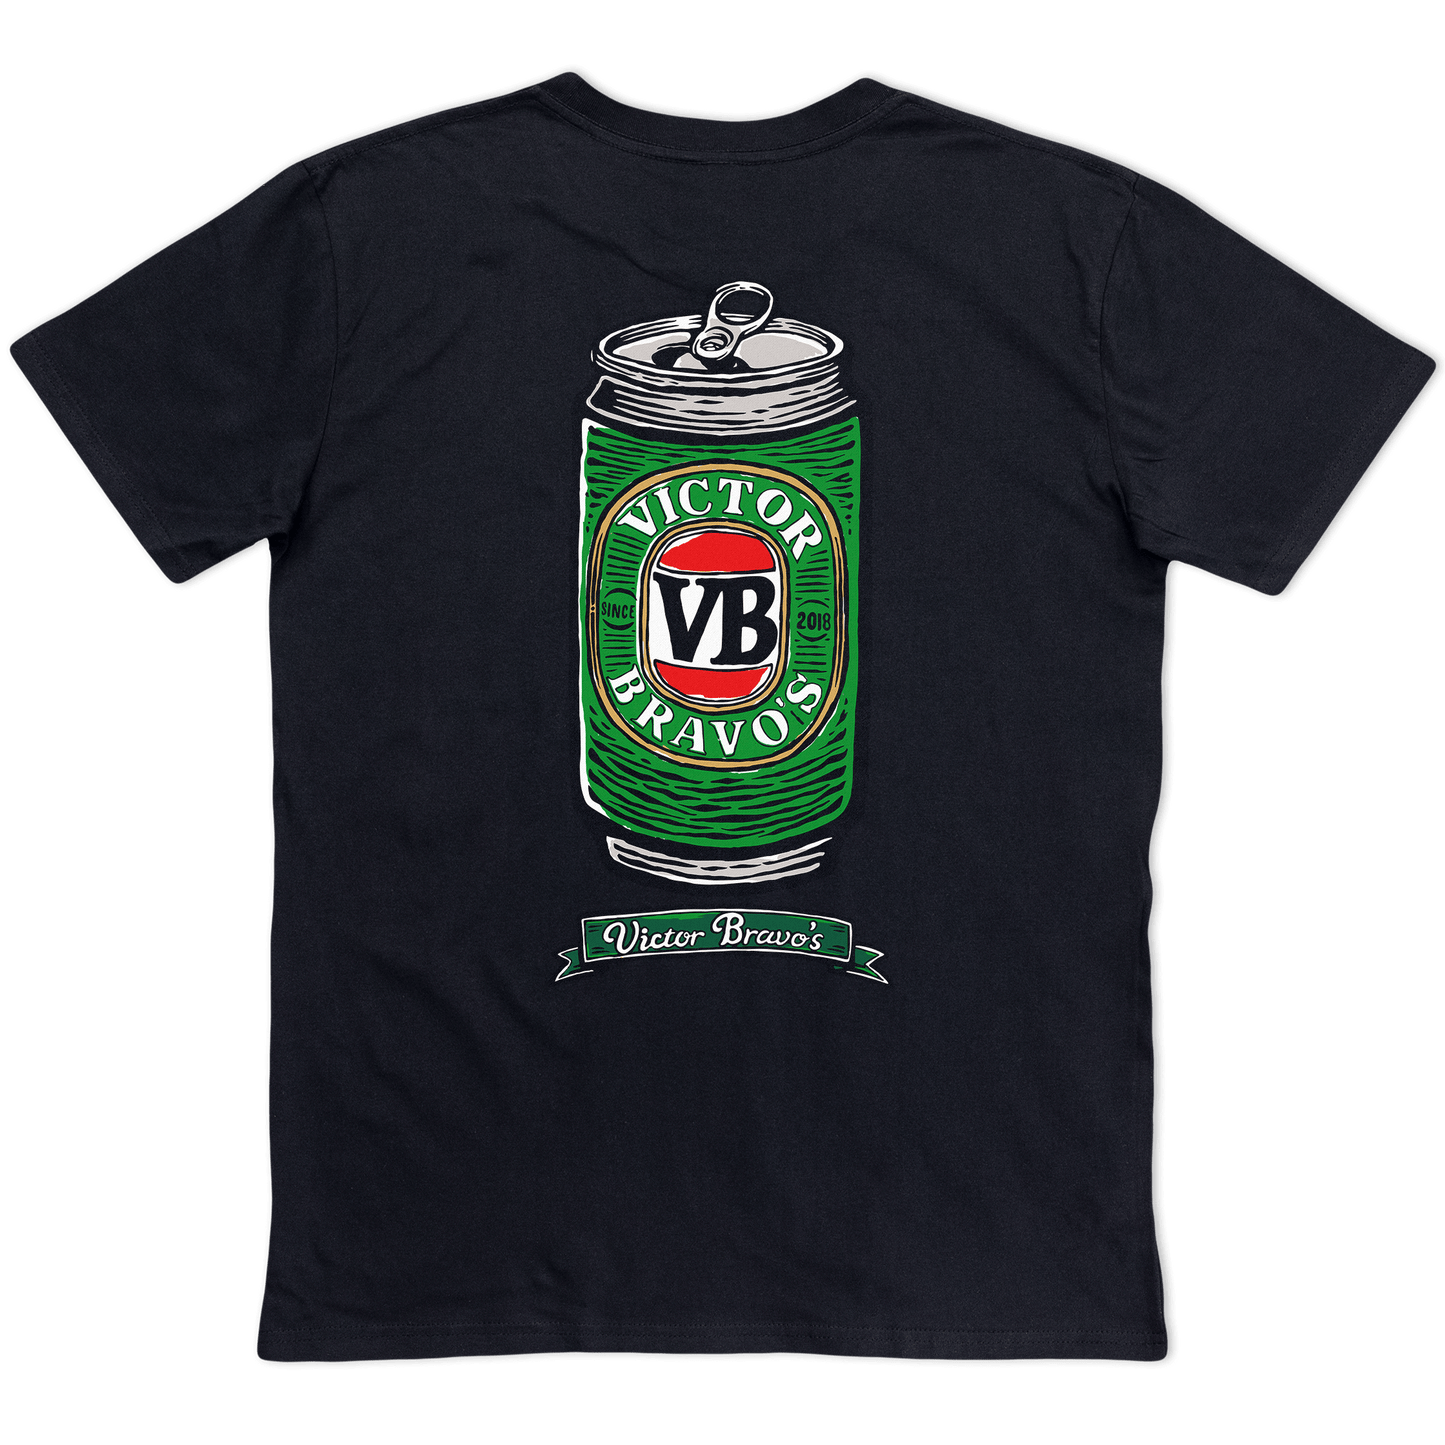 Victor Bravo's T-Shirts Tin Life Tee Black